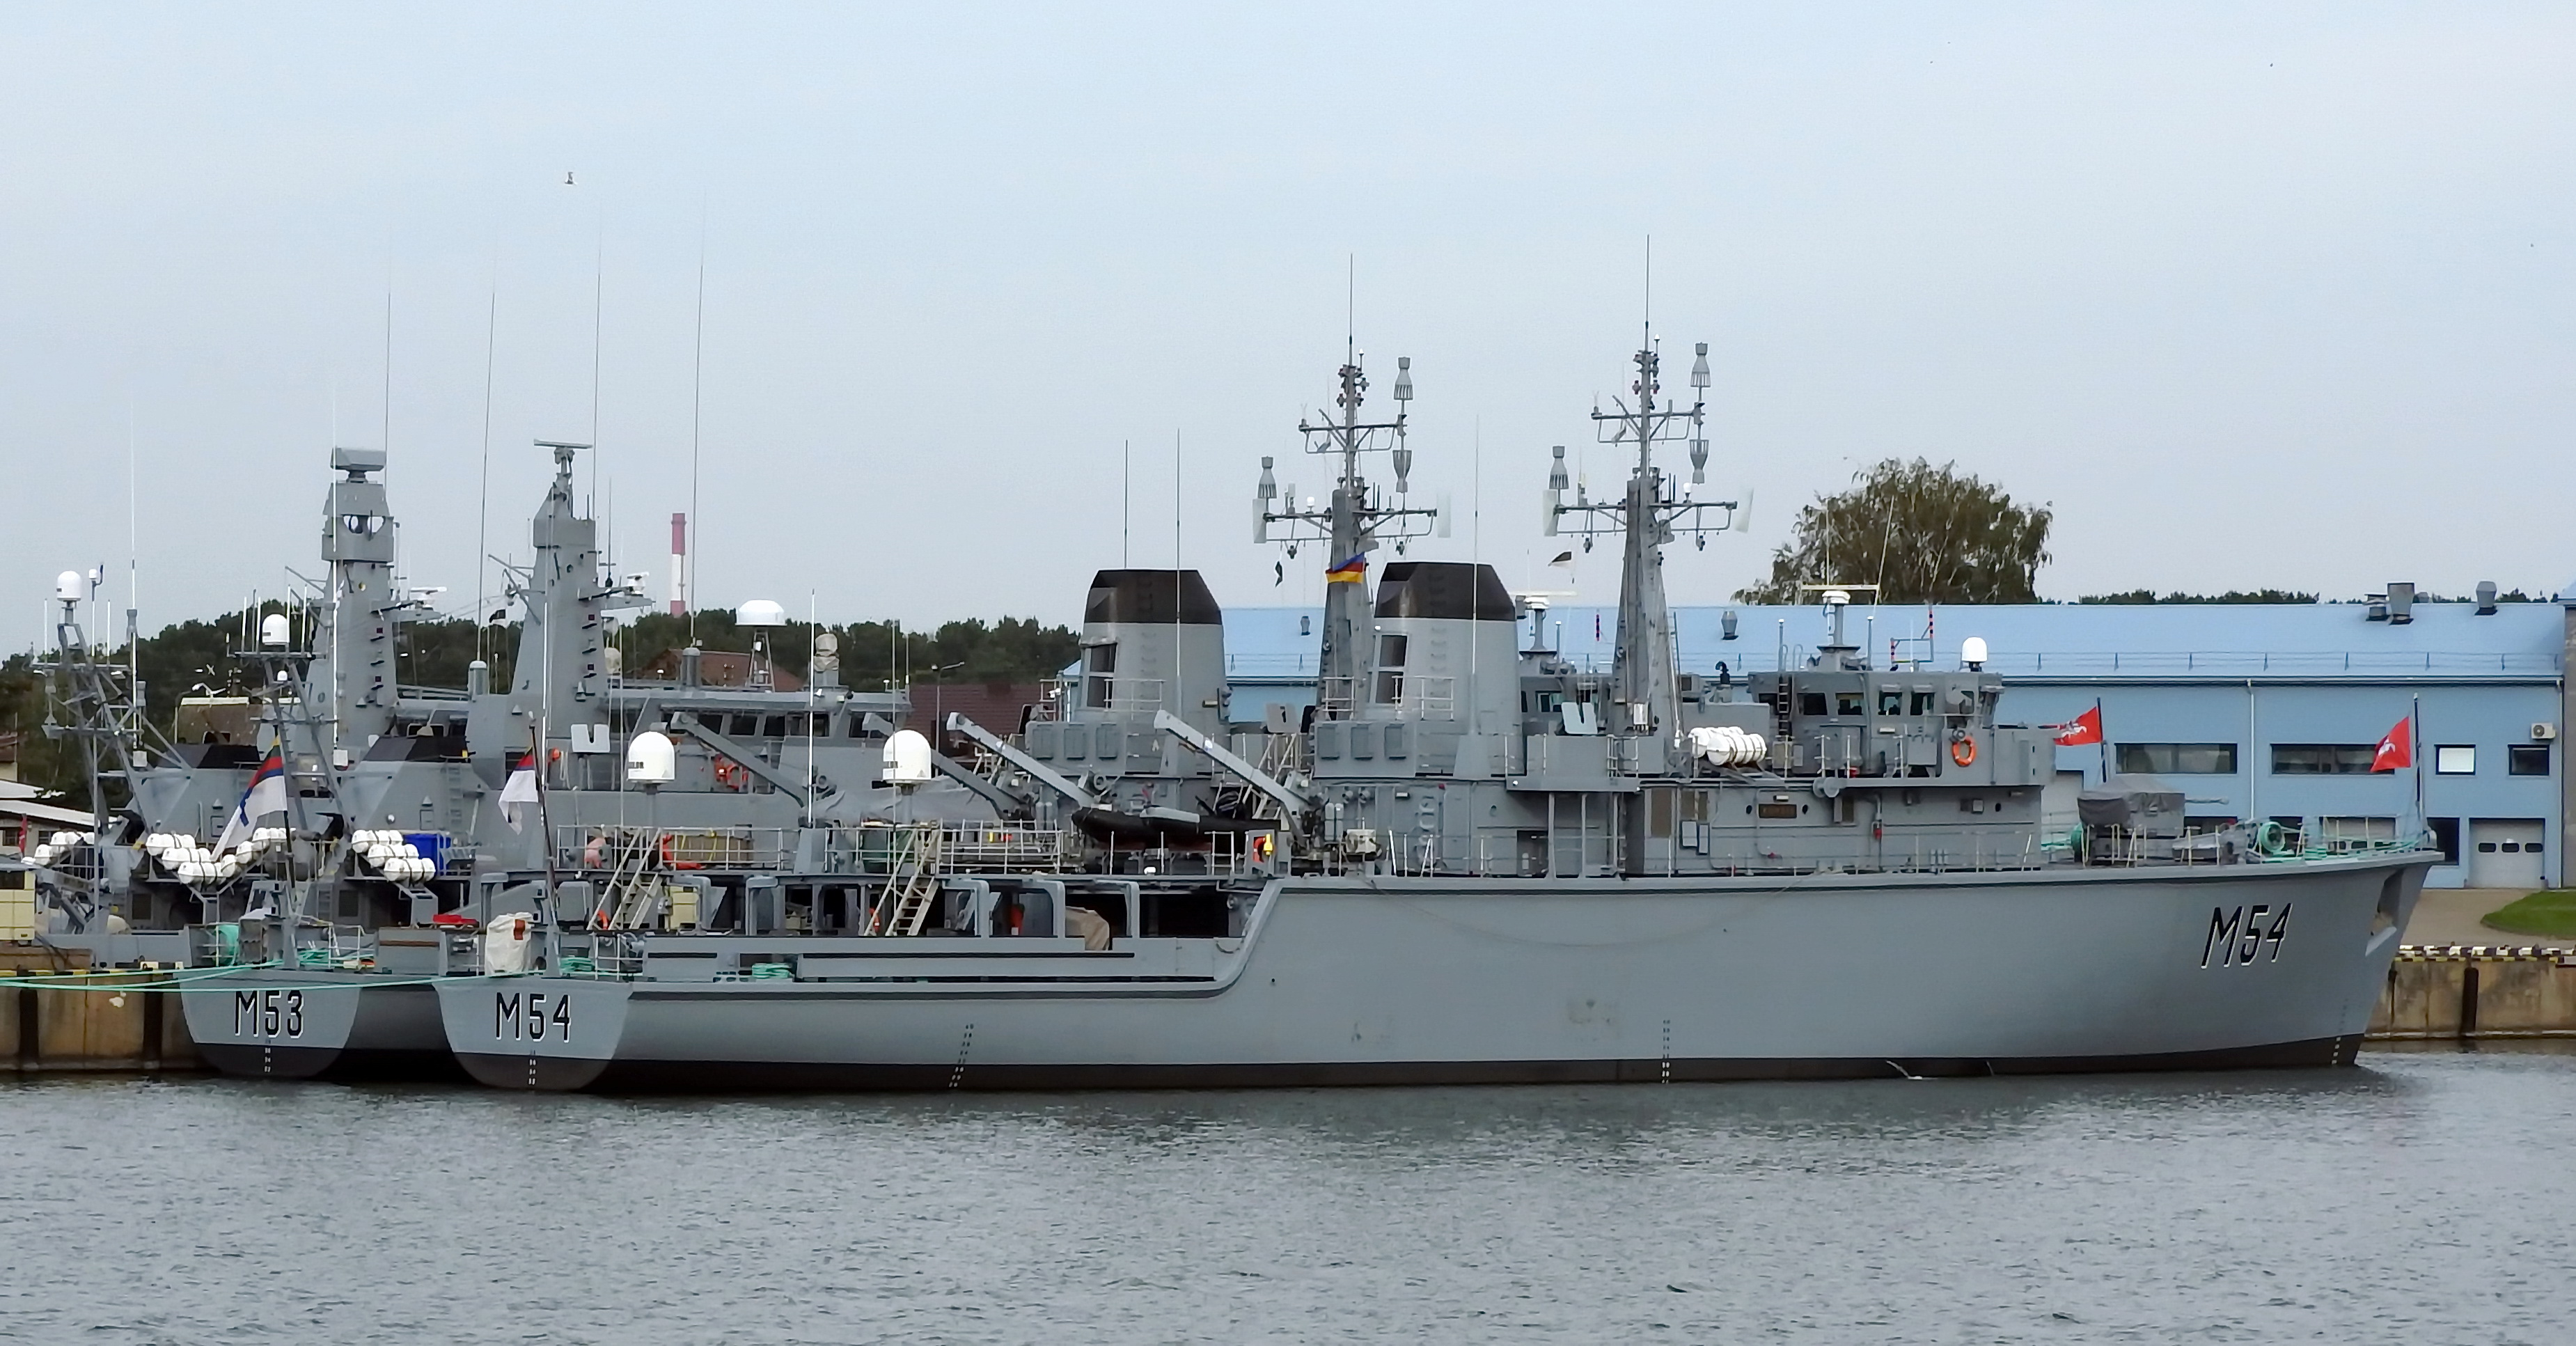 2123.  ТЩИМ  M53  Skalvis , M54  Kurvis  ВМС  Литвы.JPG